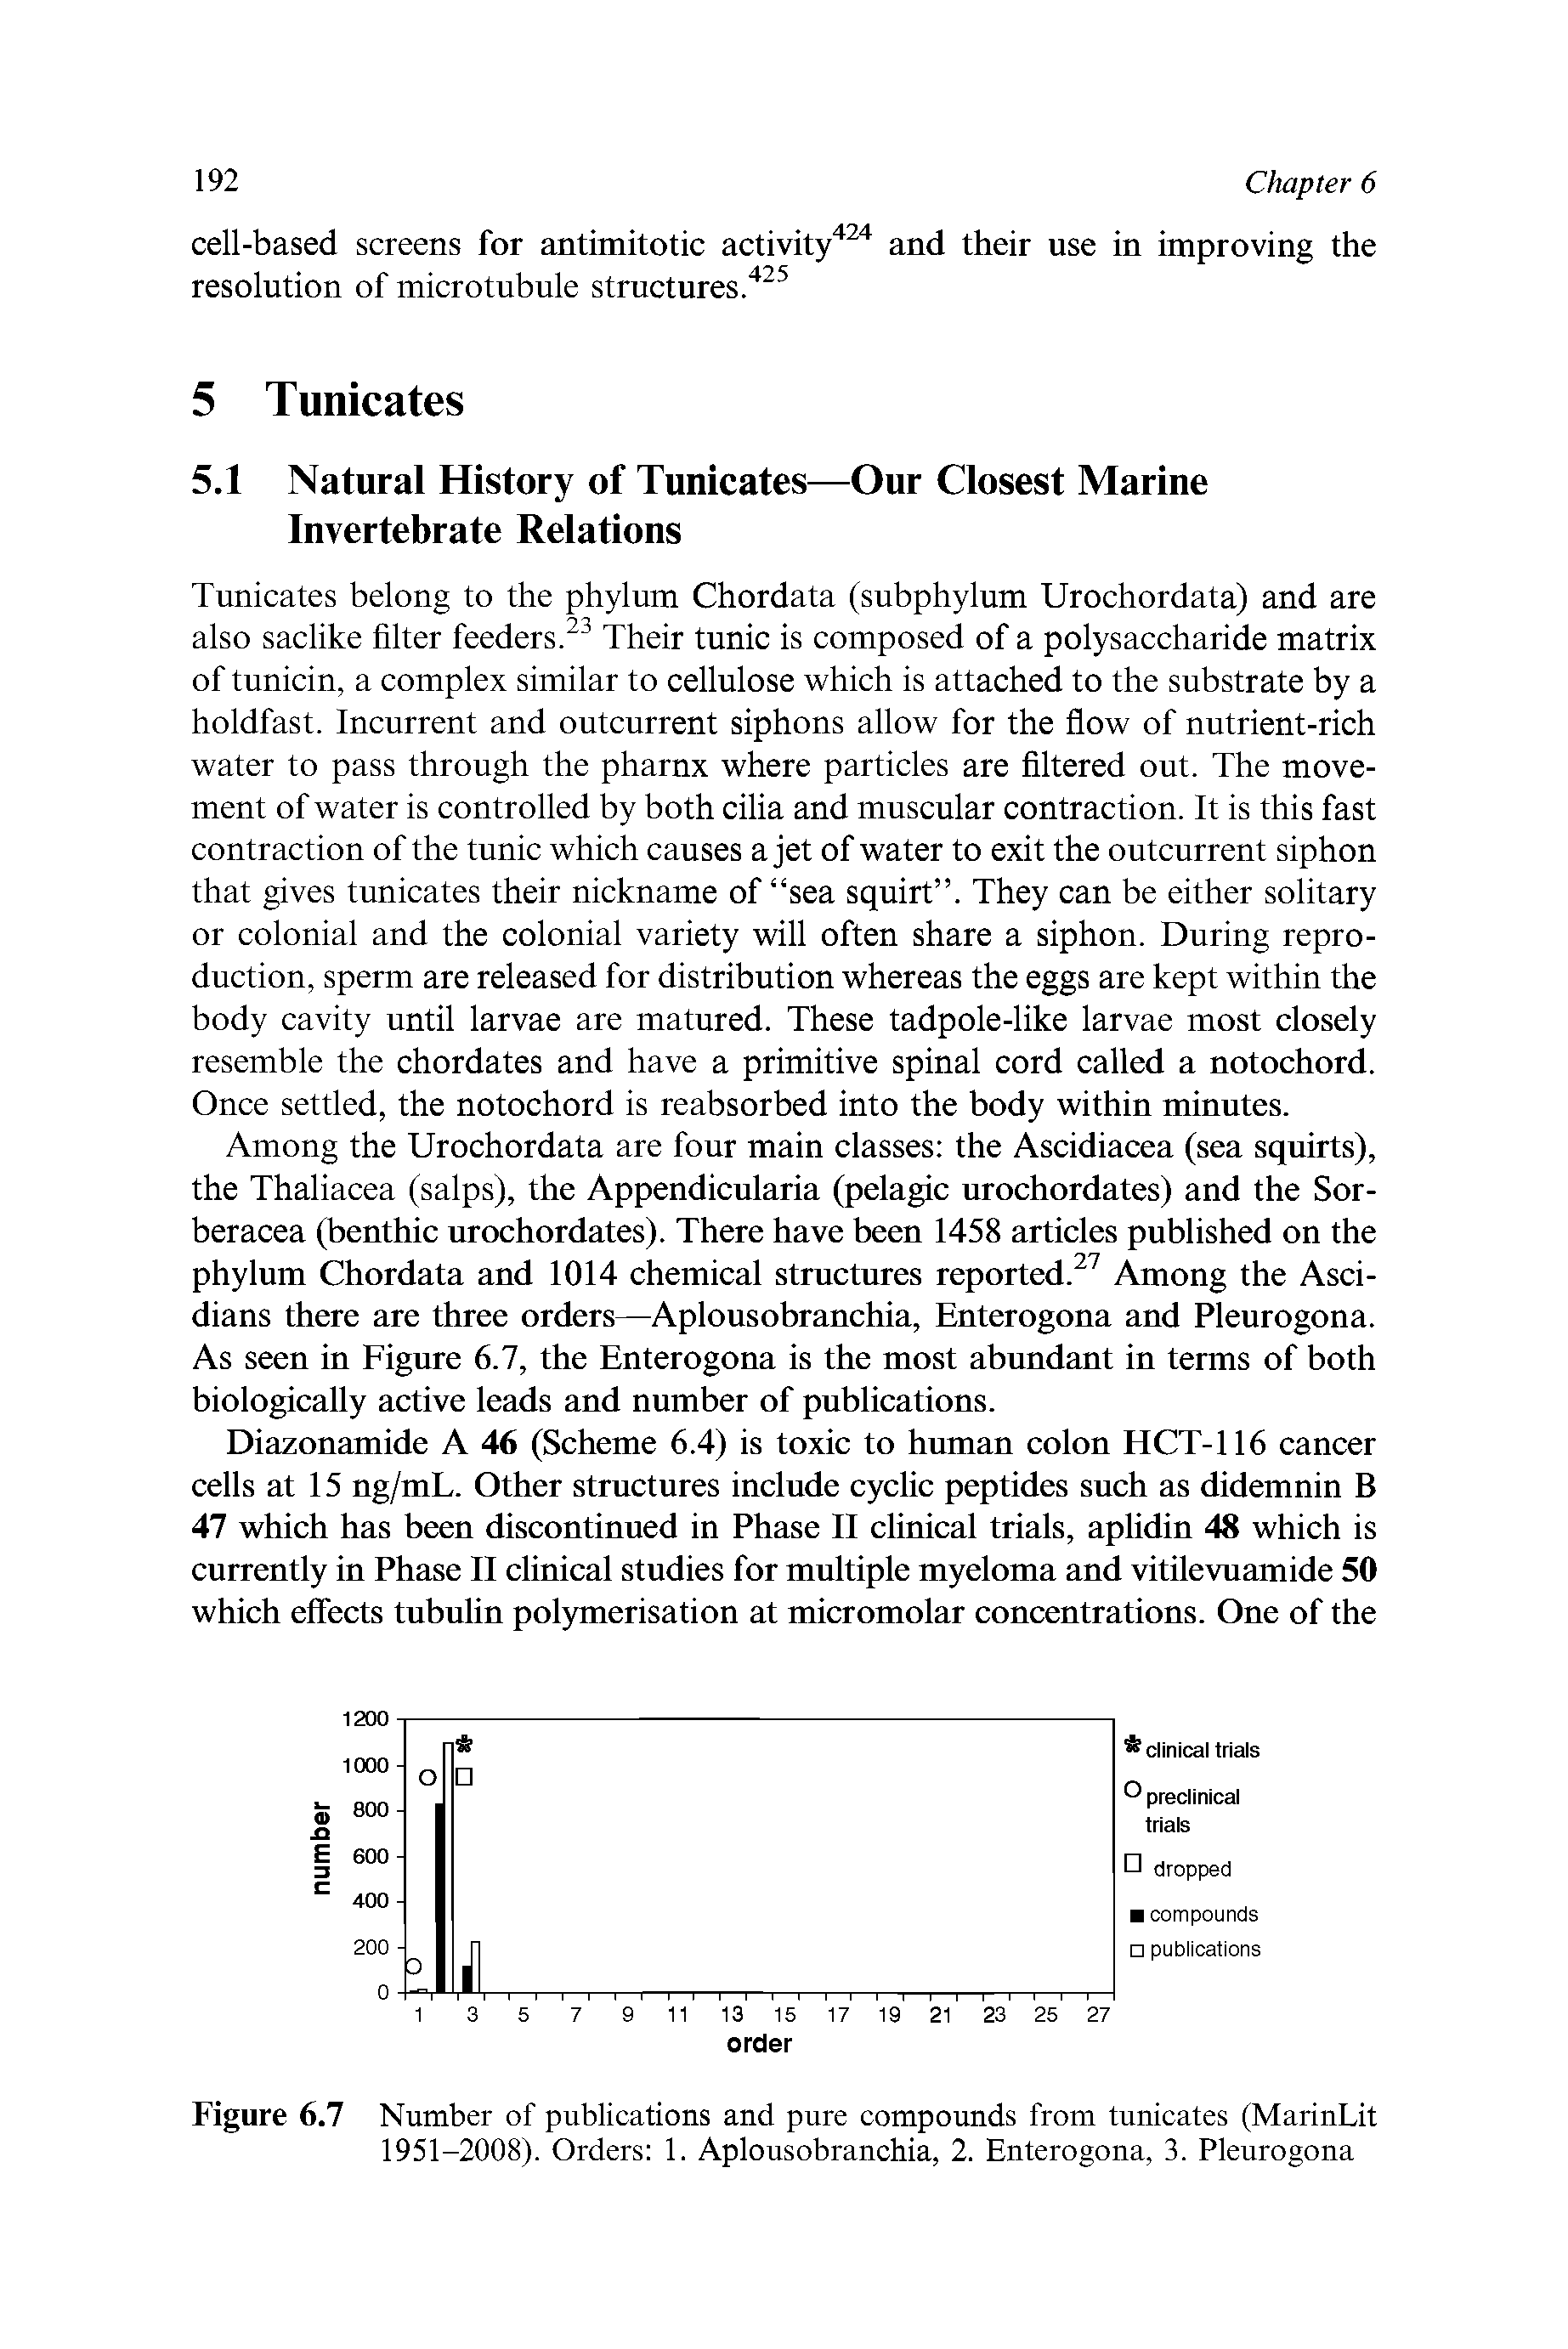 Figure 6.7 Number of publications and pure compounds from tunicates (MarinLit 1951-2008). Orders 1. Aplousobranchia, 2. Enterogona, 3. Pleurogona...